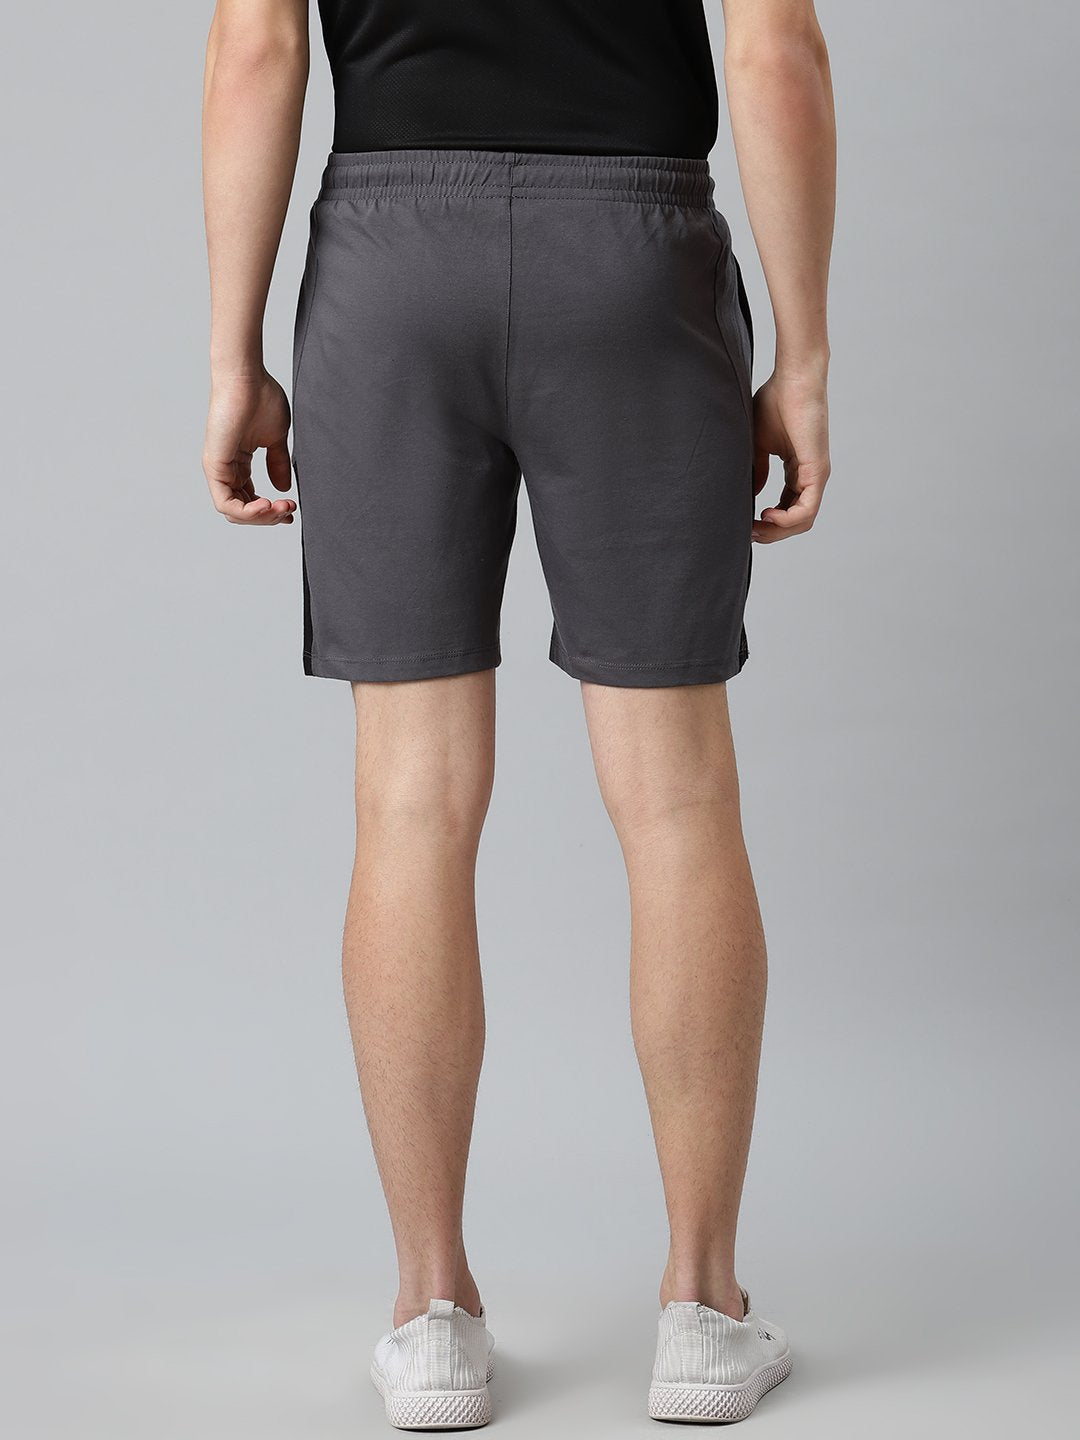 Alcis Men Charcoal Grey Solid Sports Shorts